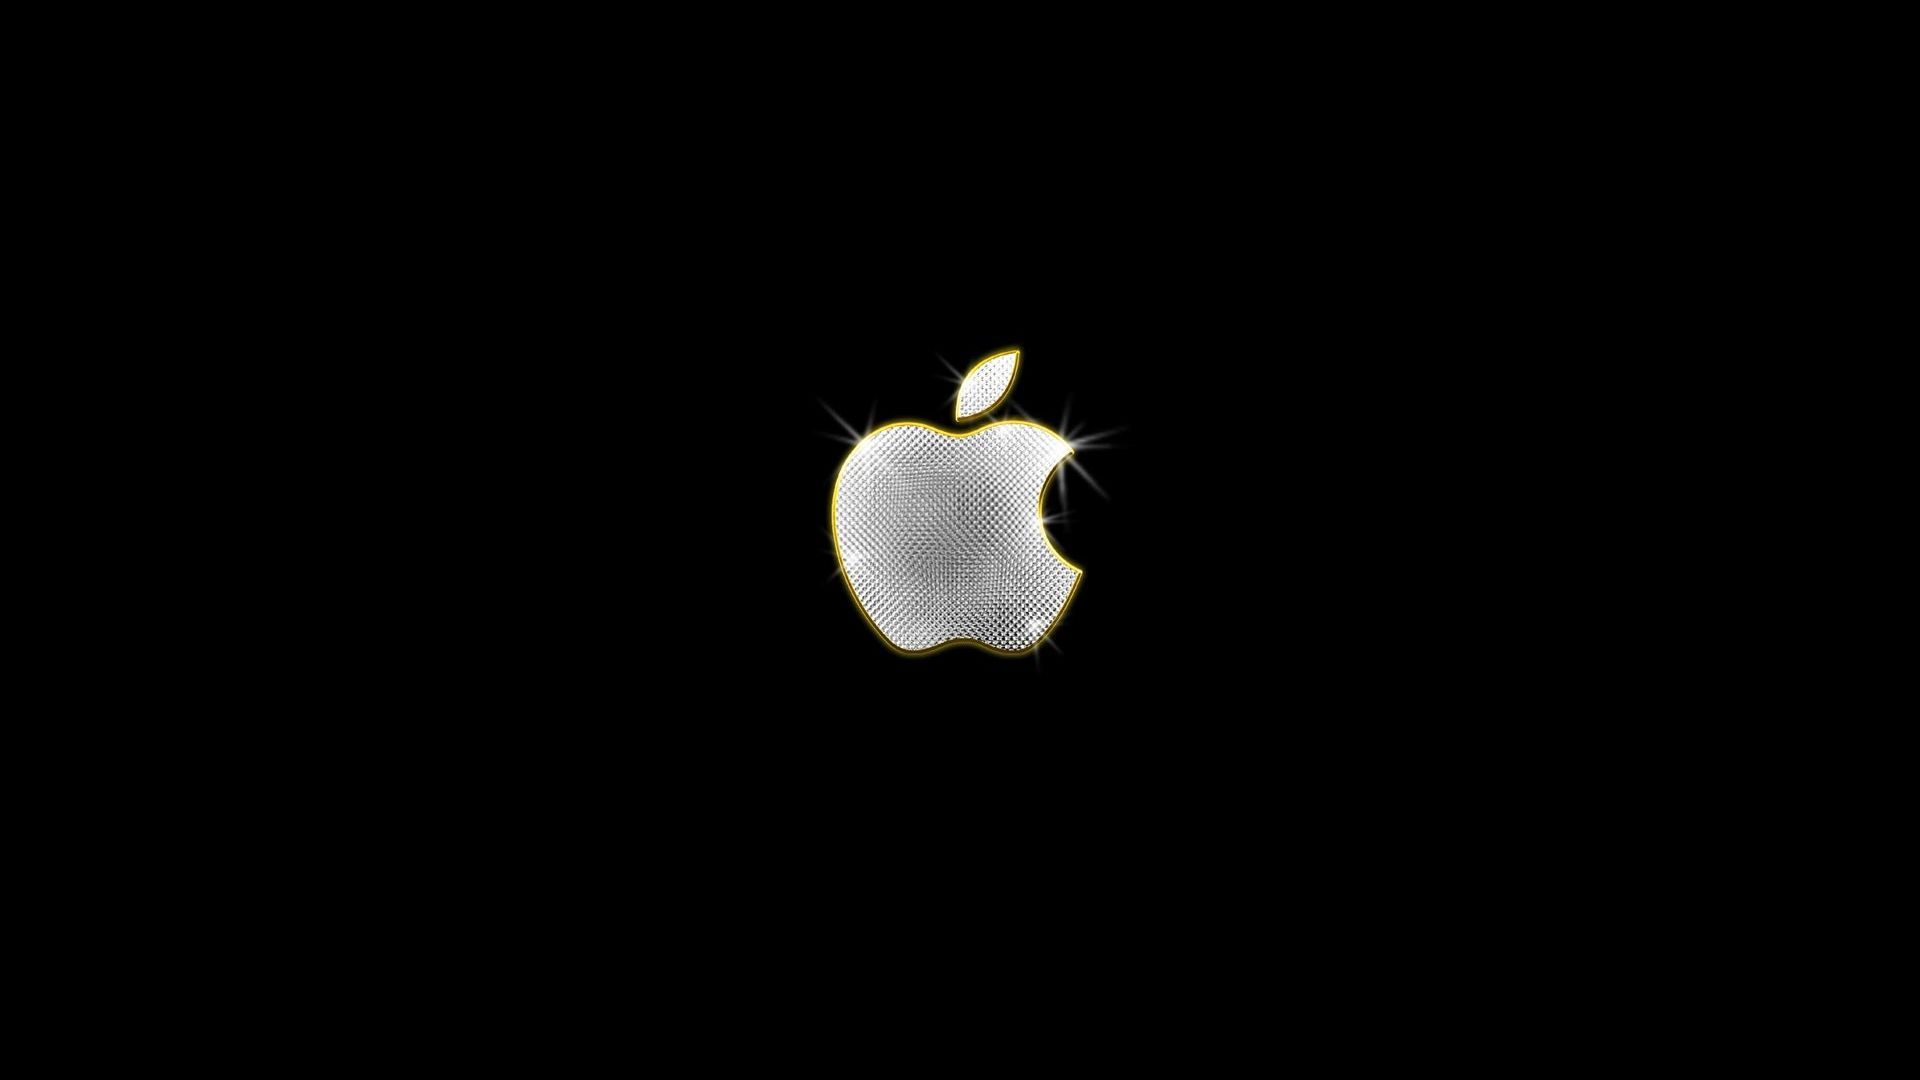 Computer: Golden Apple Logo, picture nr. 32330